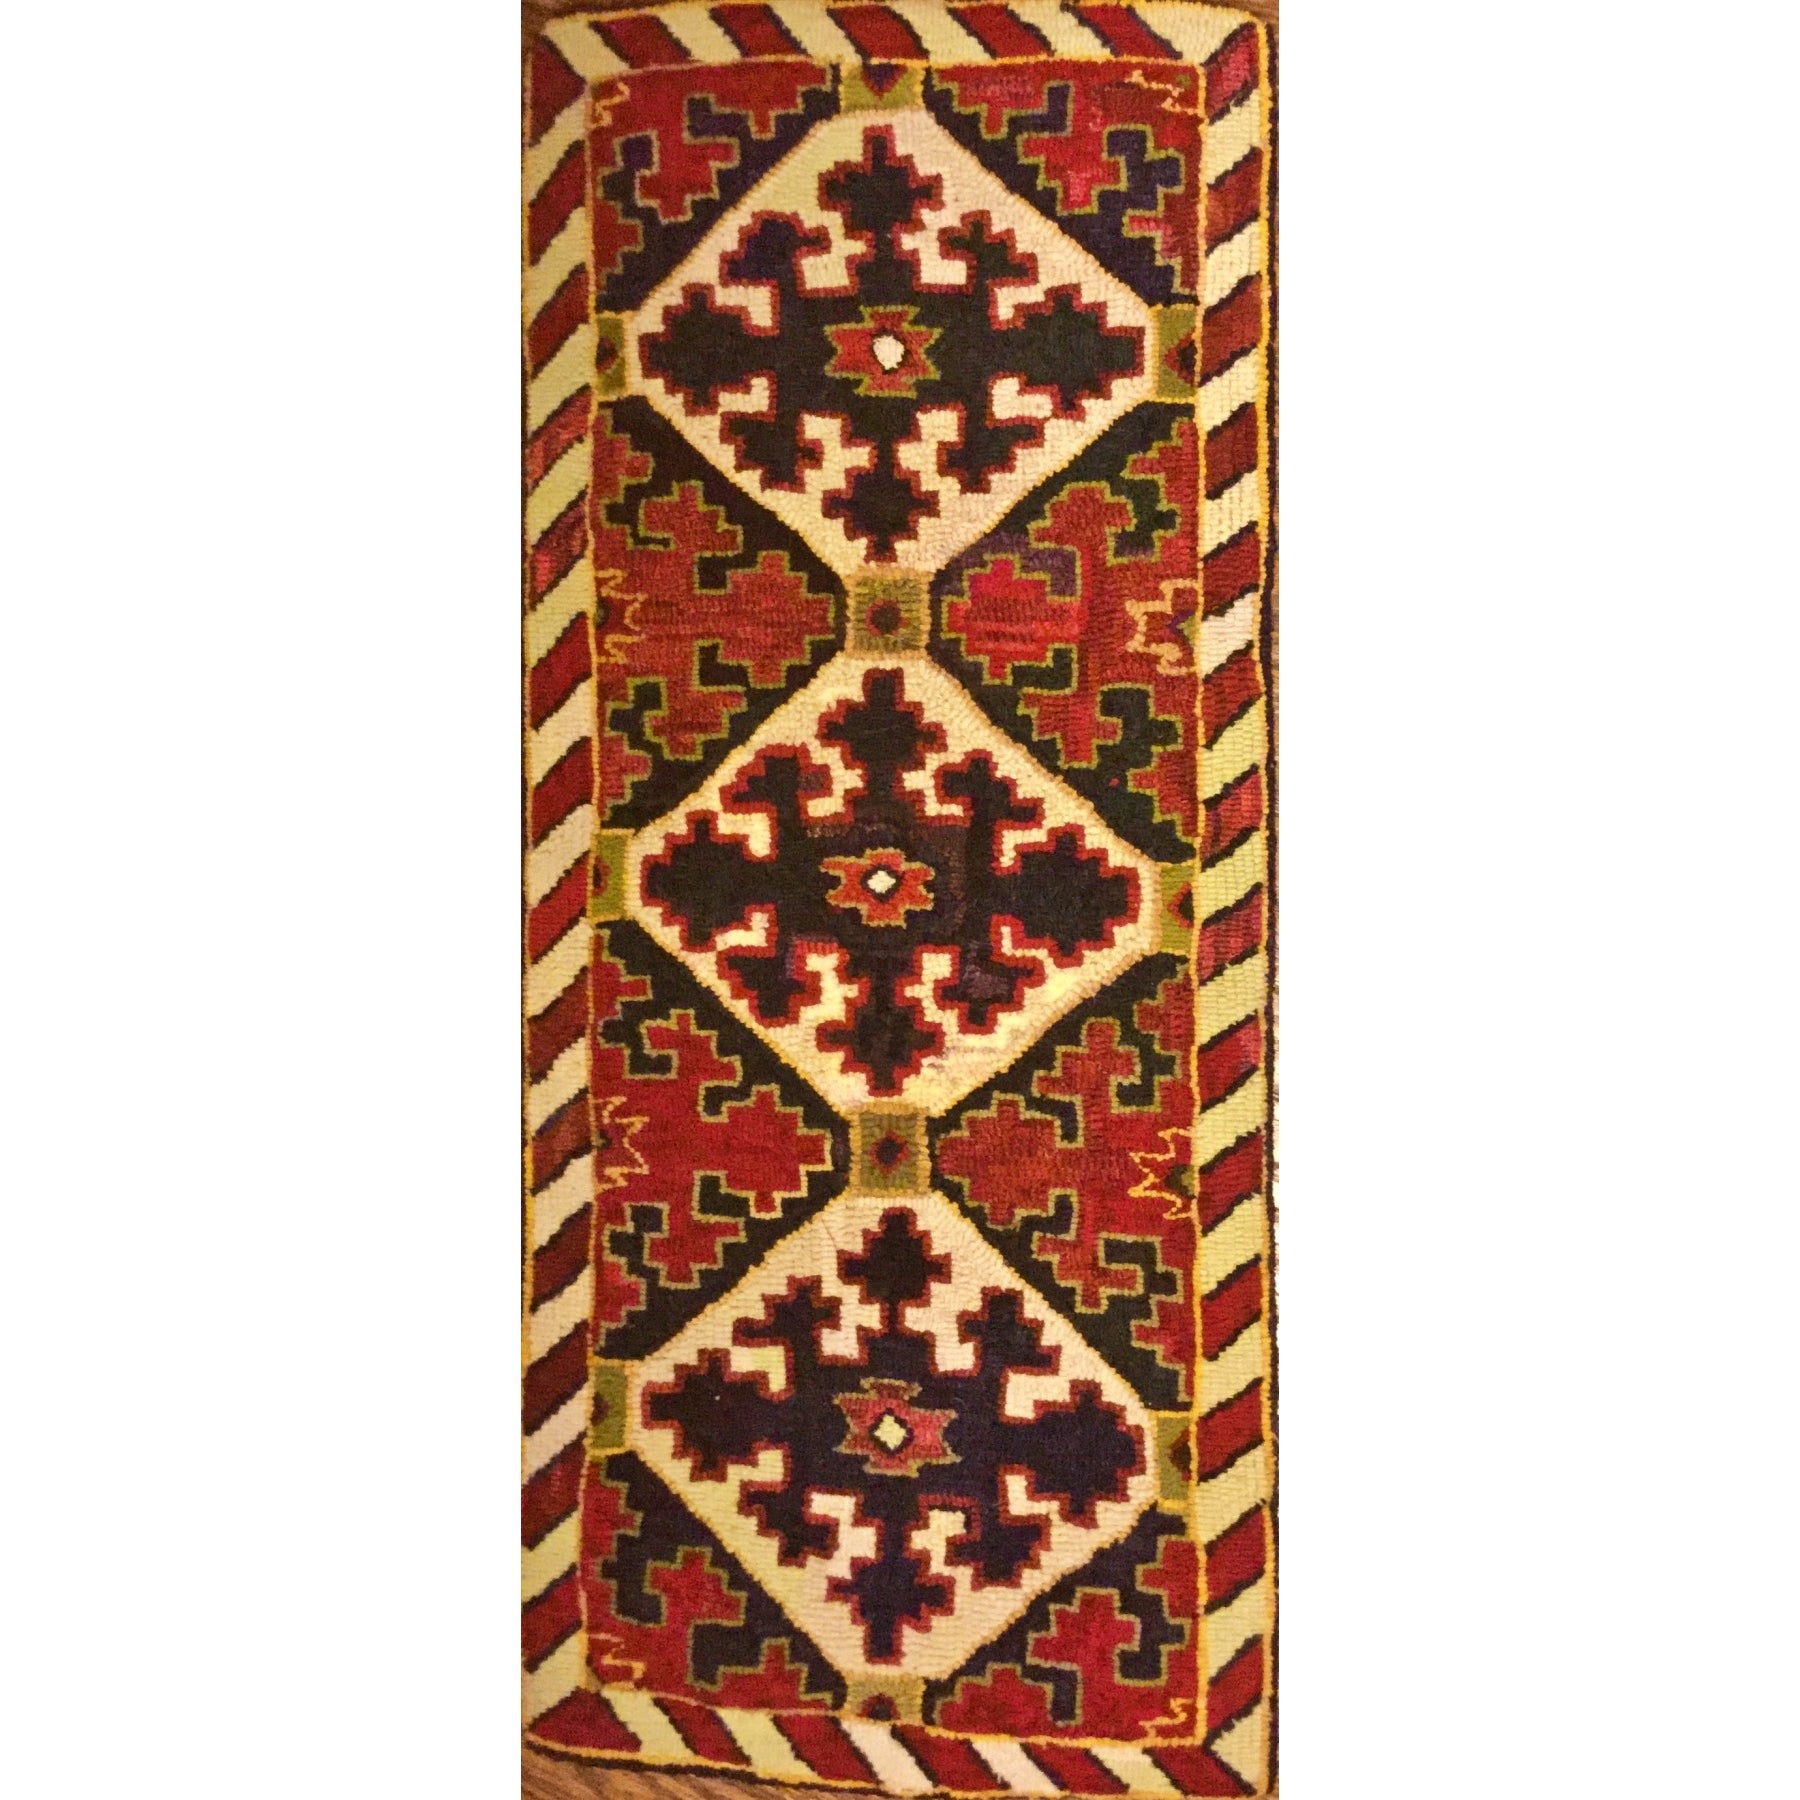 Kurdistan Runner, rug hooked by Martha Reynolds